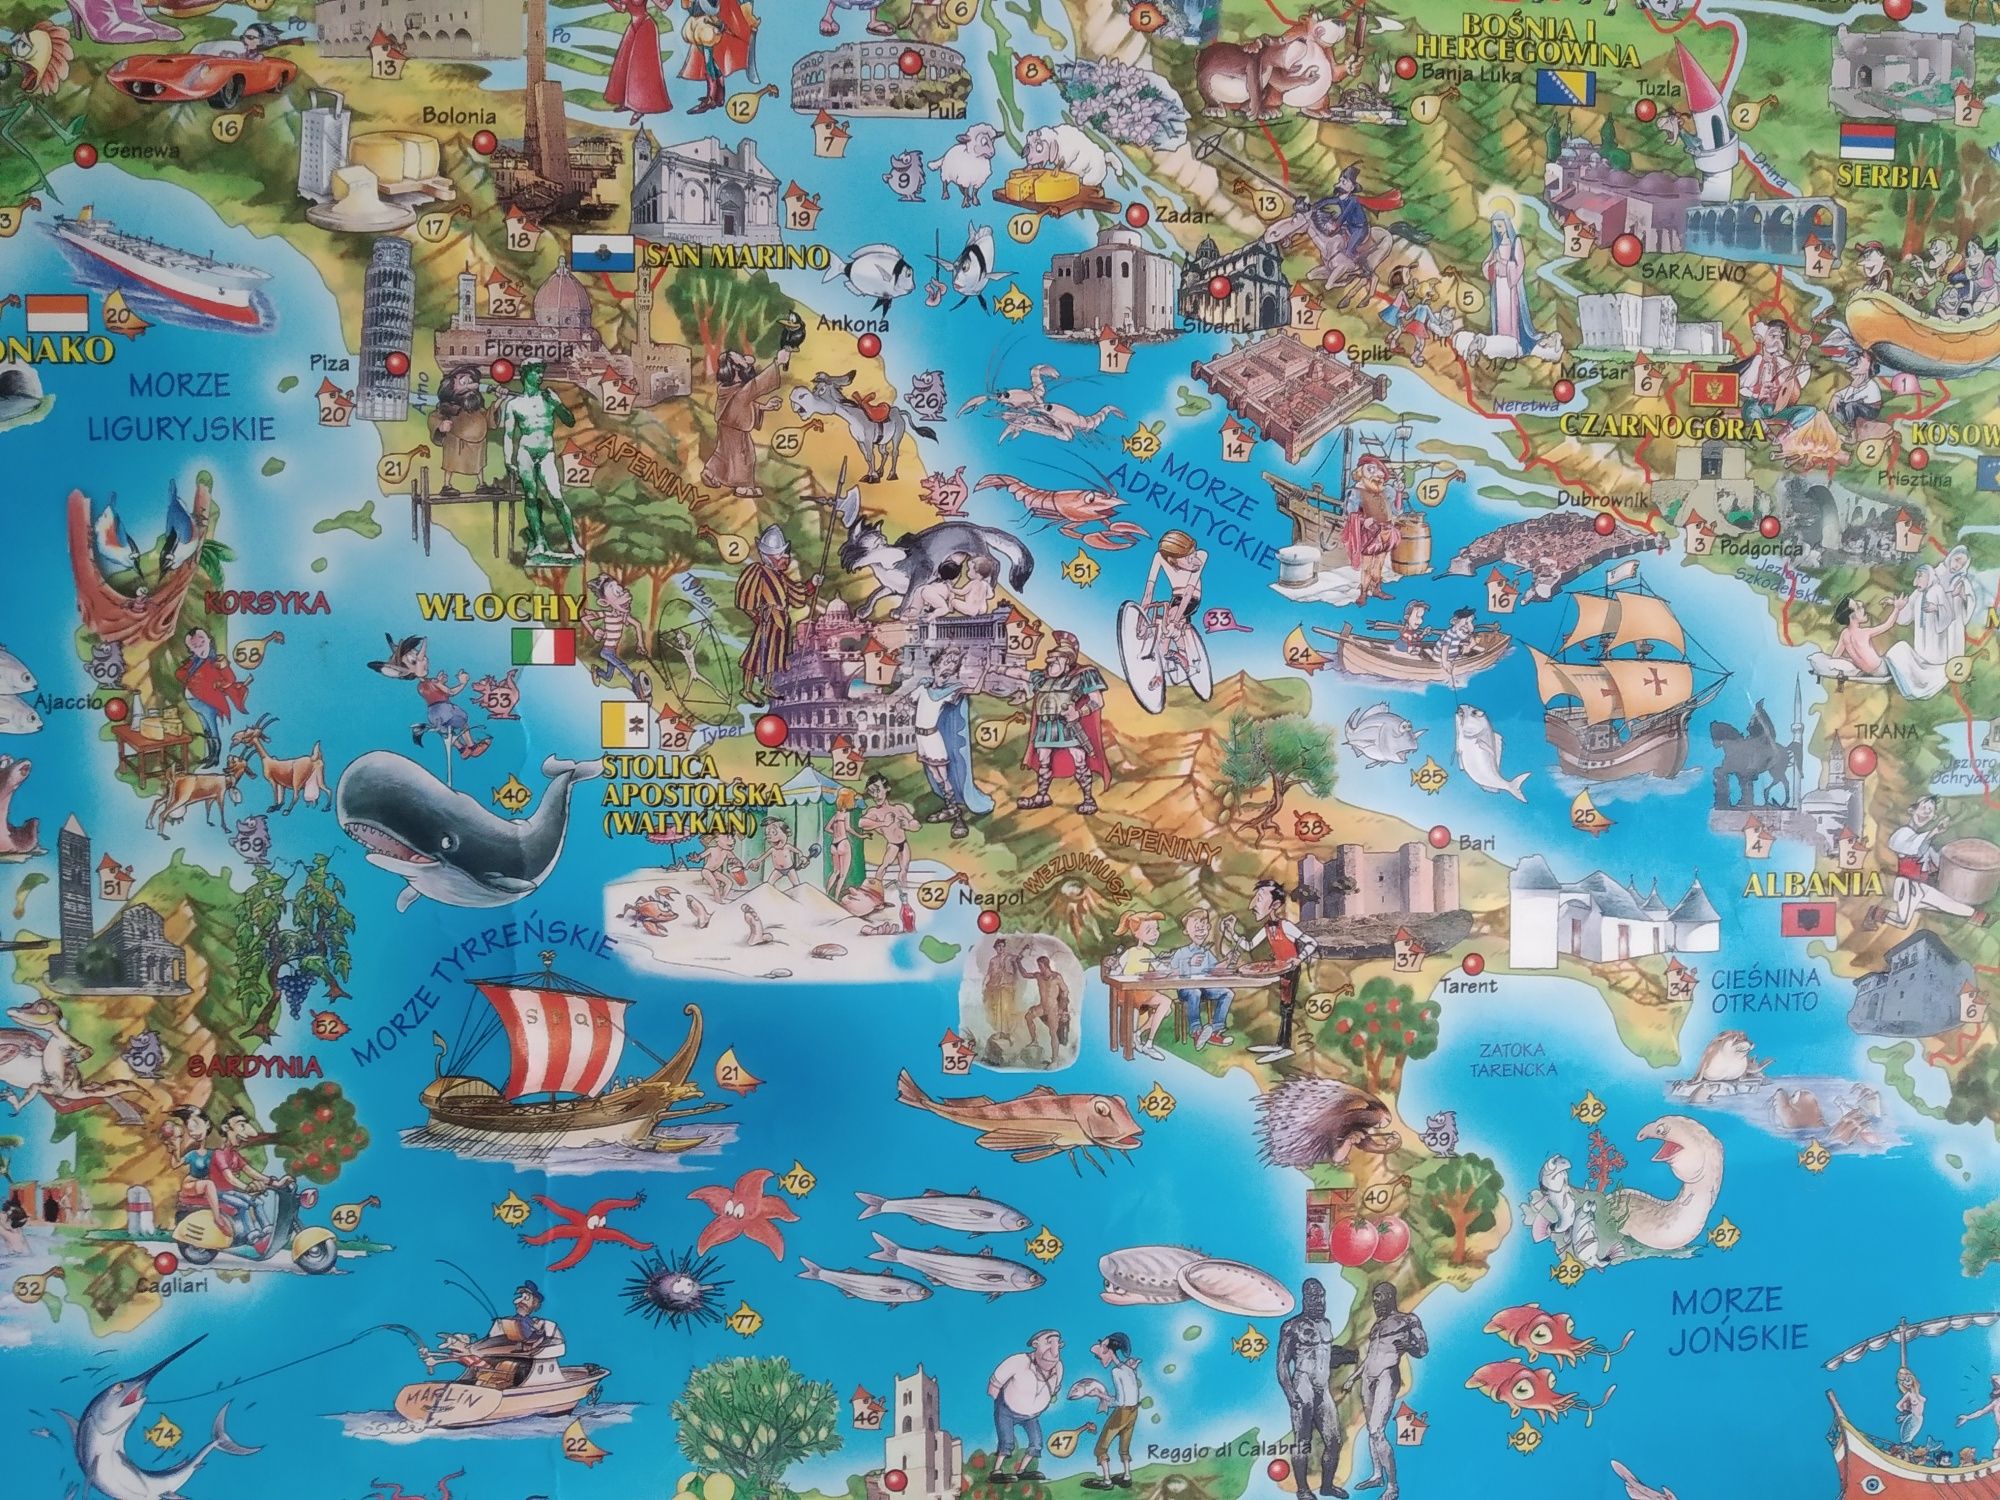 Obrazkowa mapa Europy